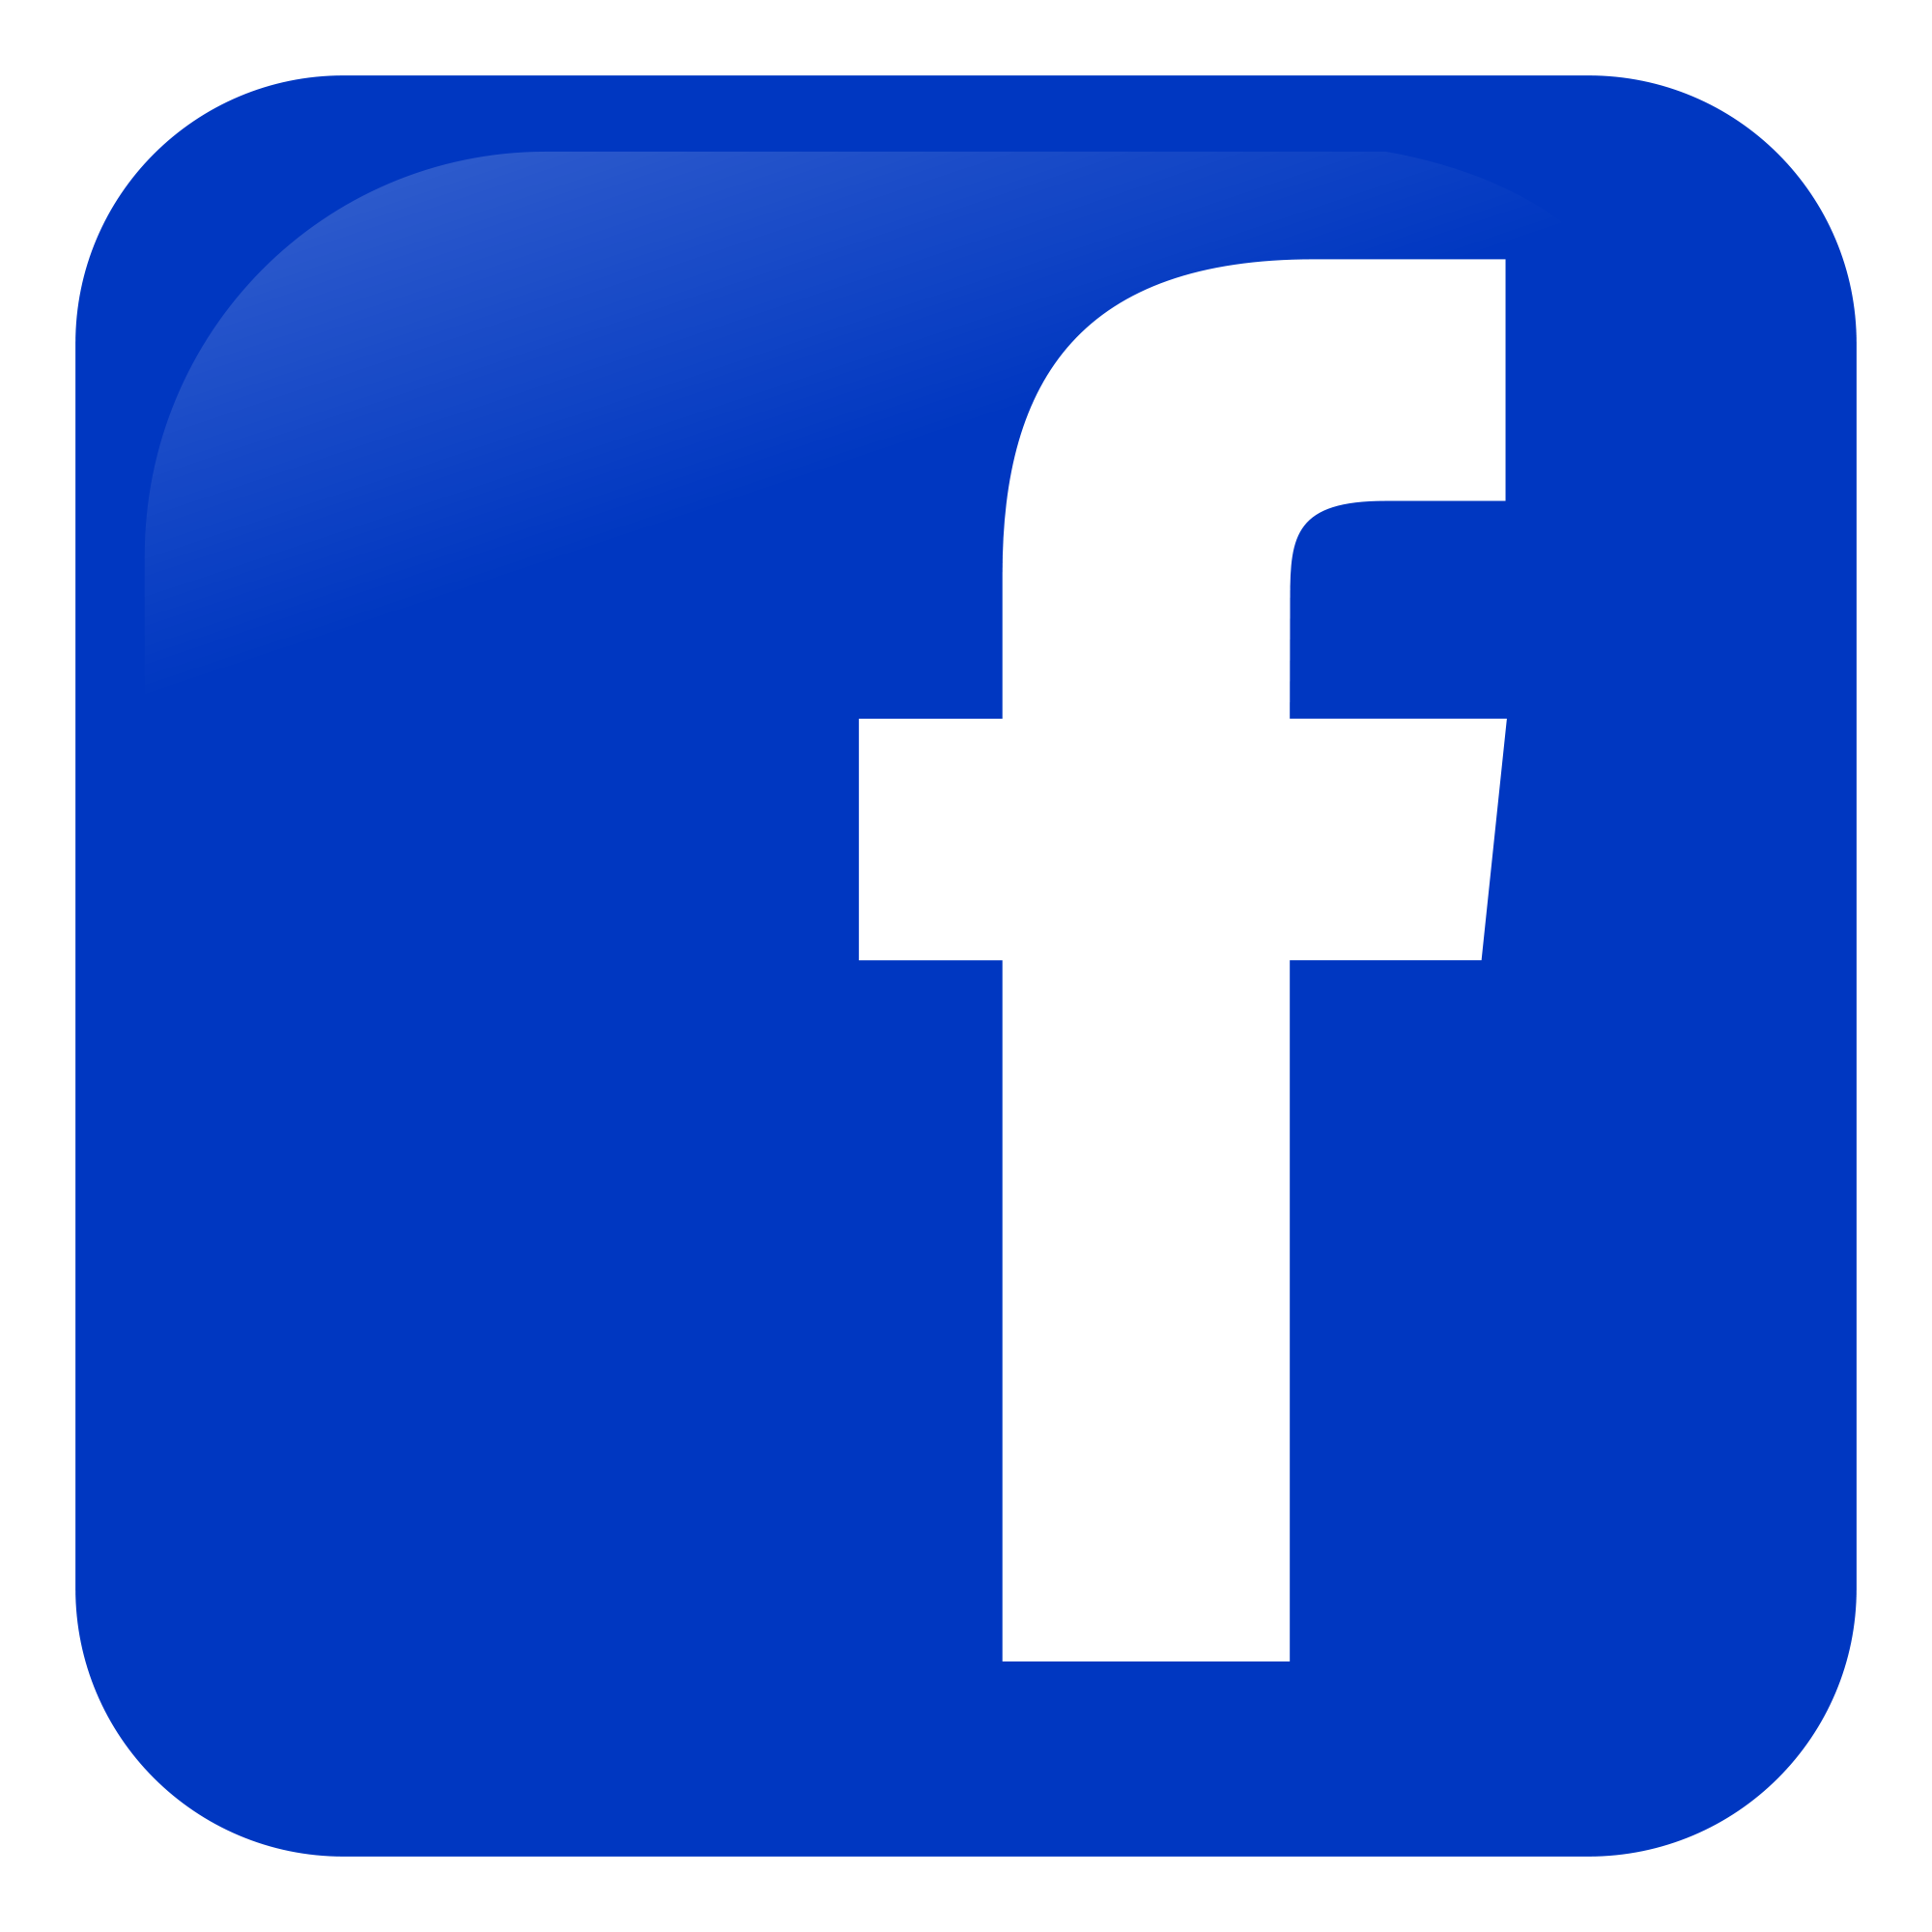 Facebook Logos PNG images free download.